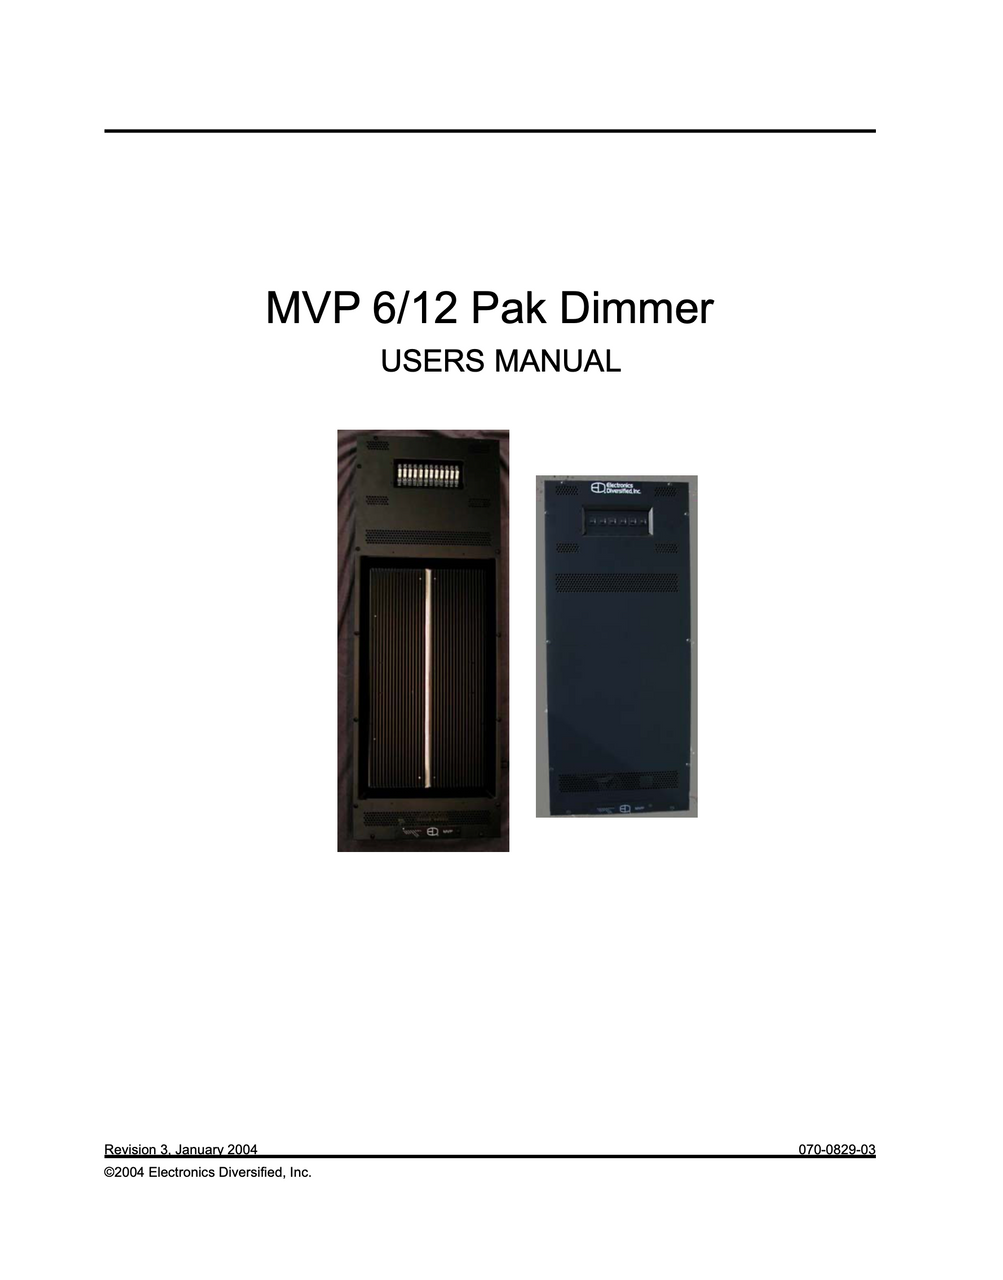 EDI MVP Dimmer Pack User Manual